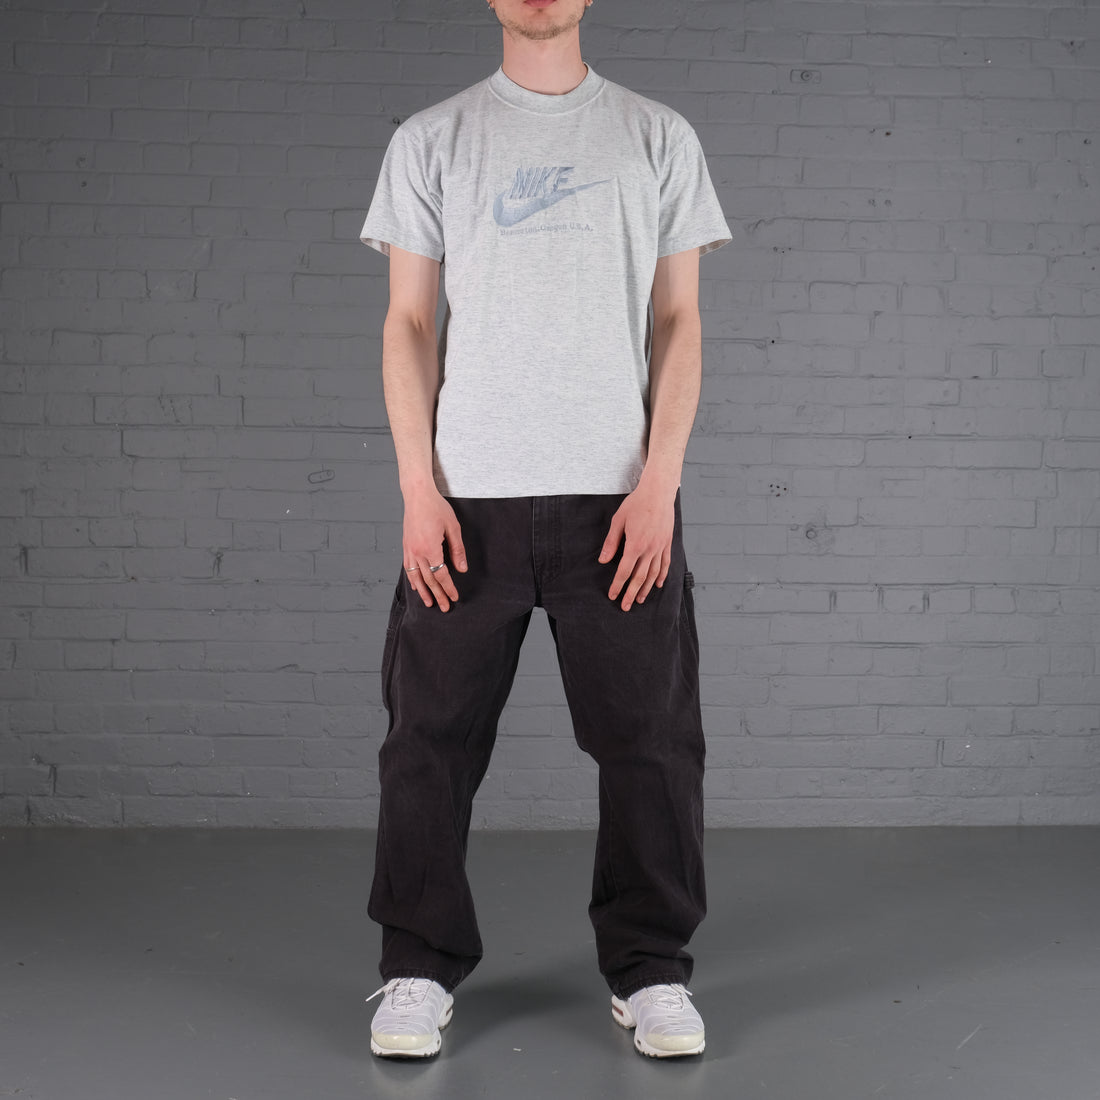 Vintage Nike t-shirt in grey